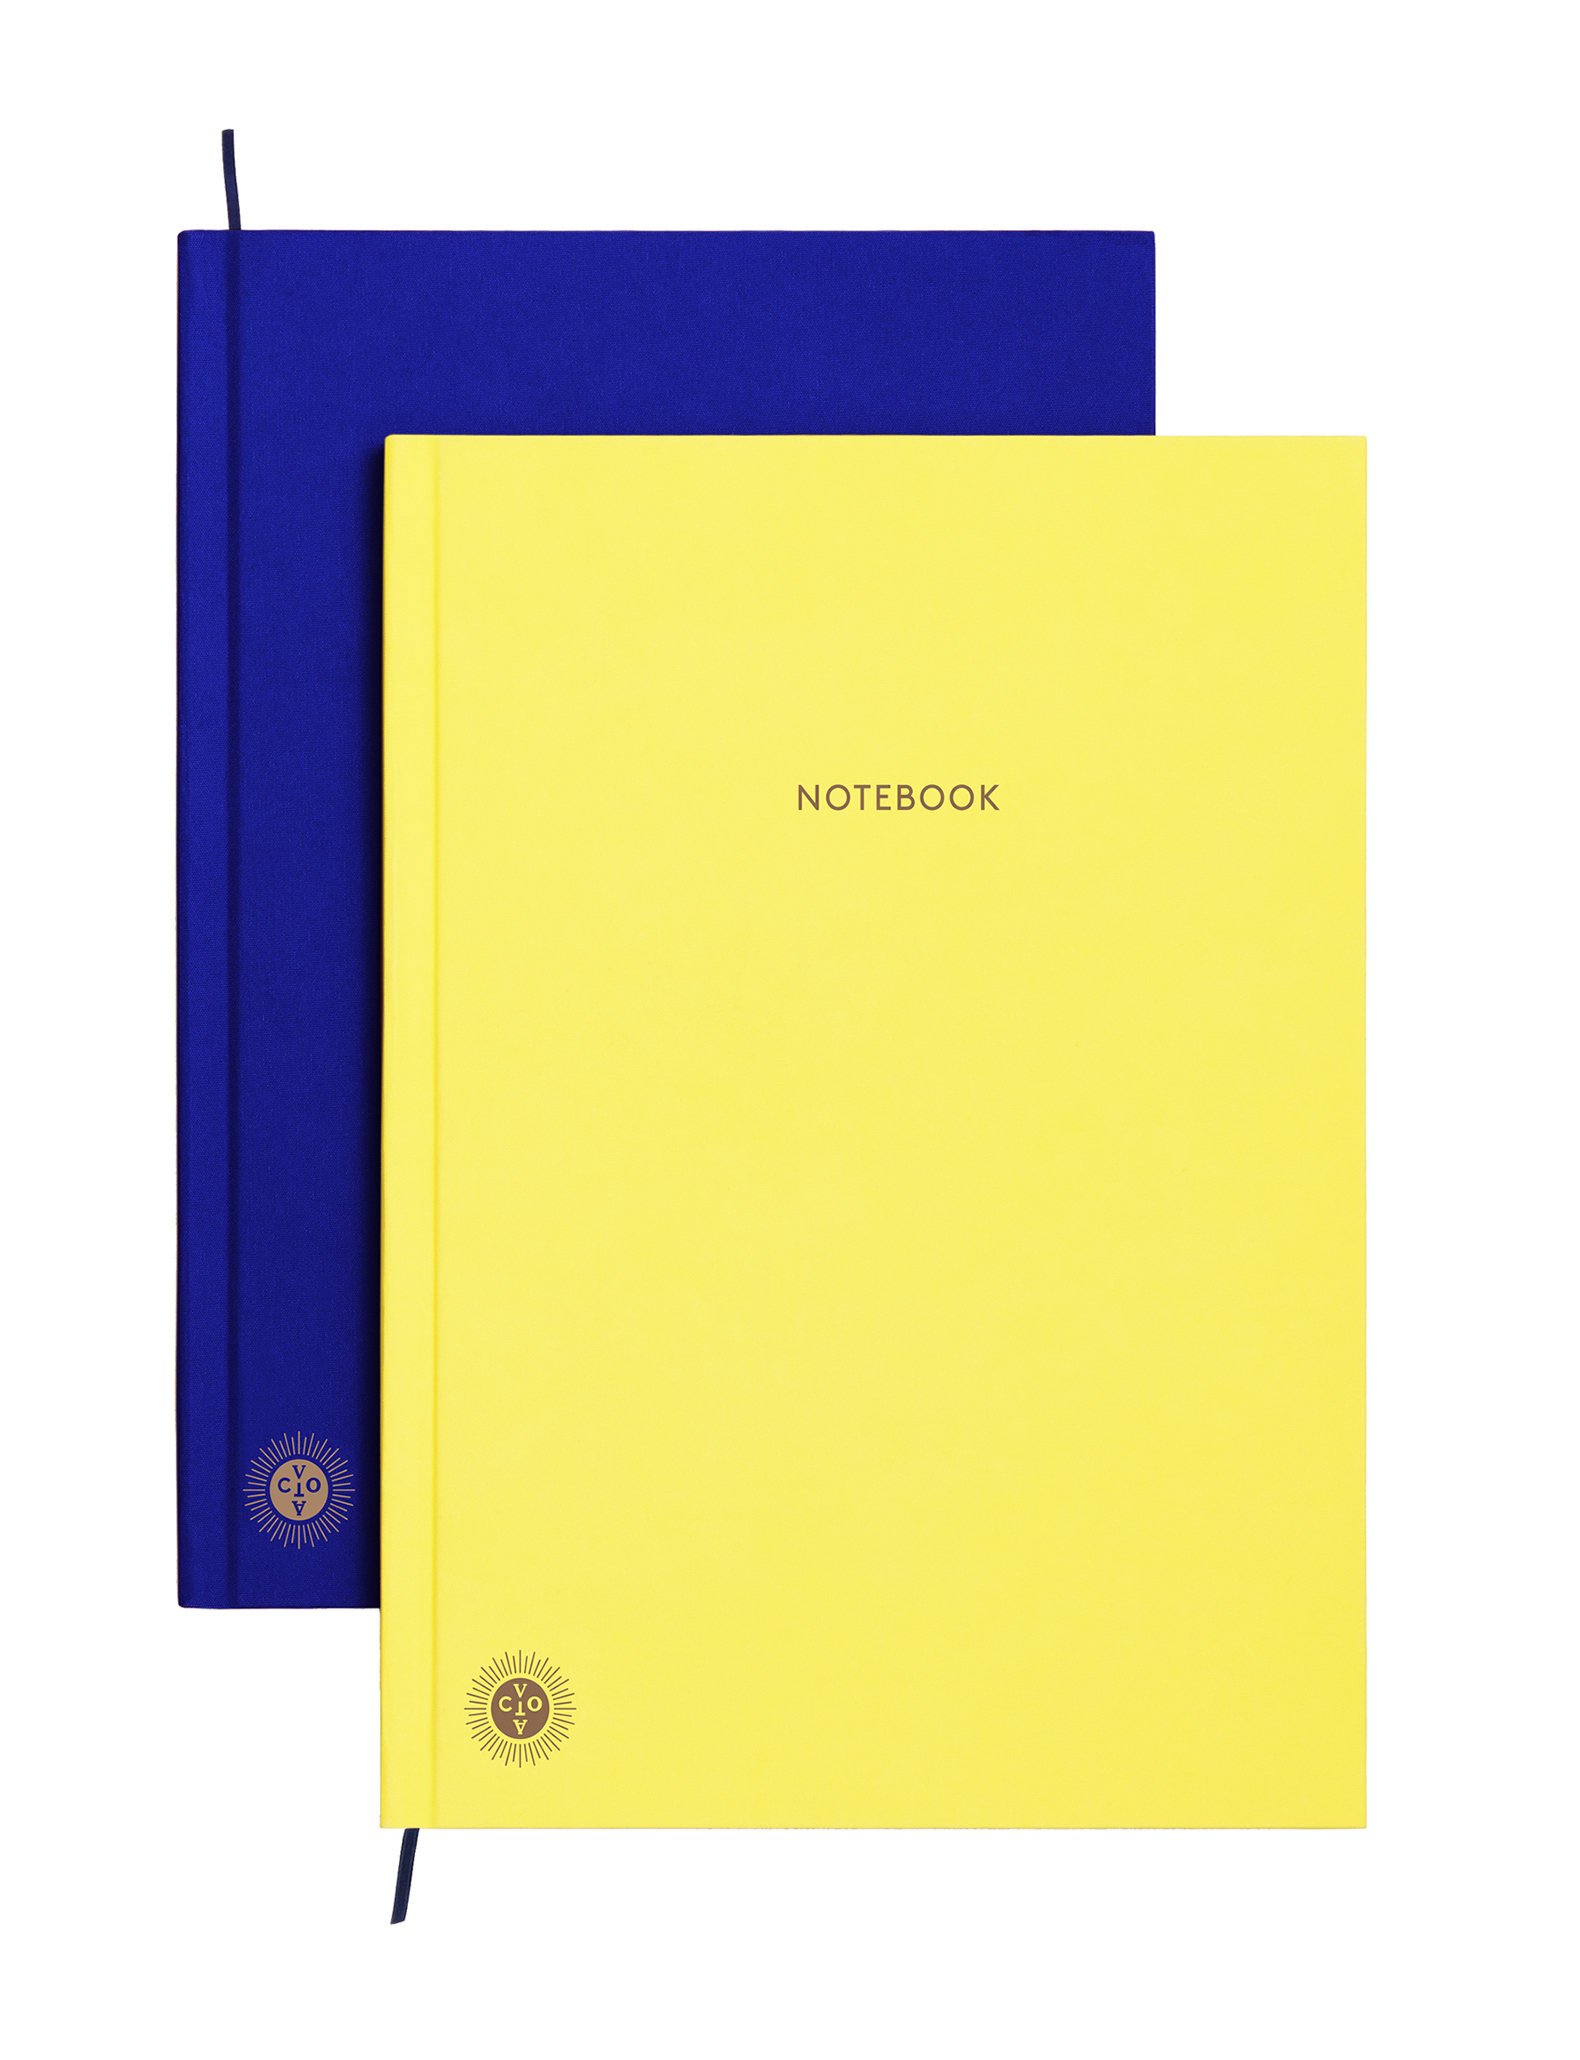 ONPYE-17 - Notebook Planner